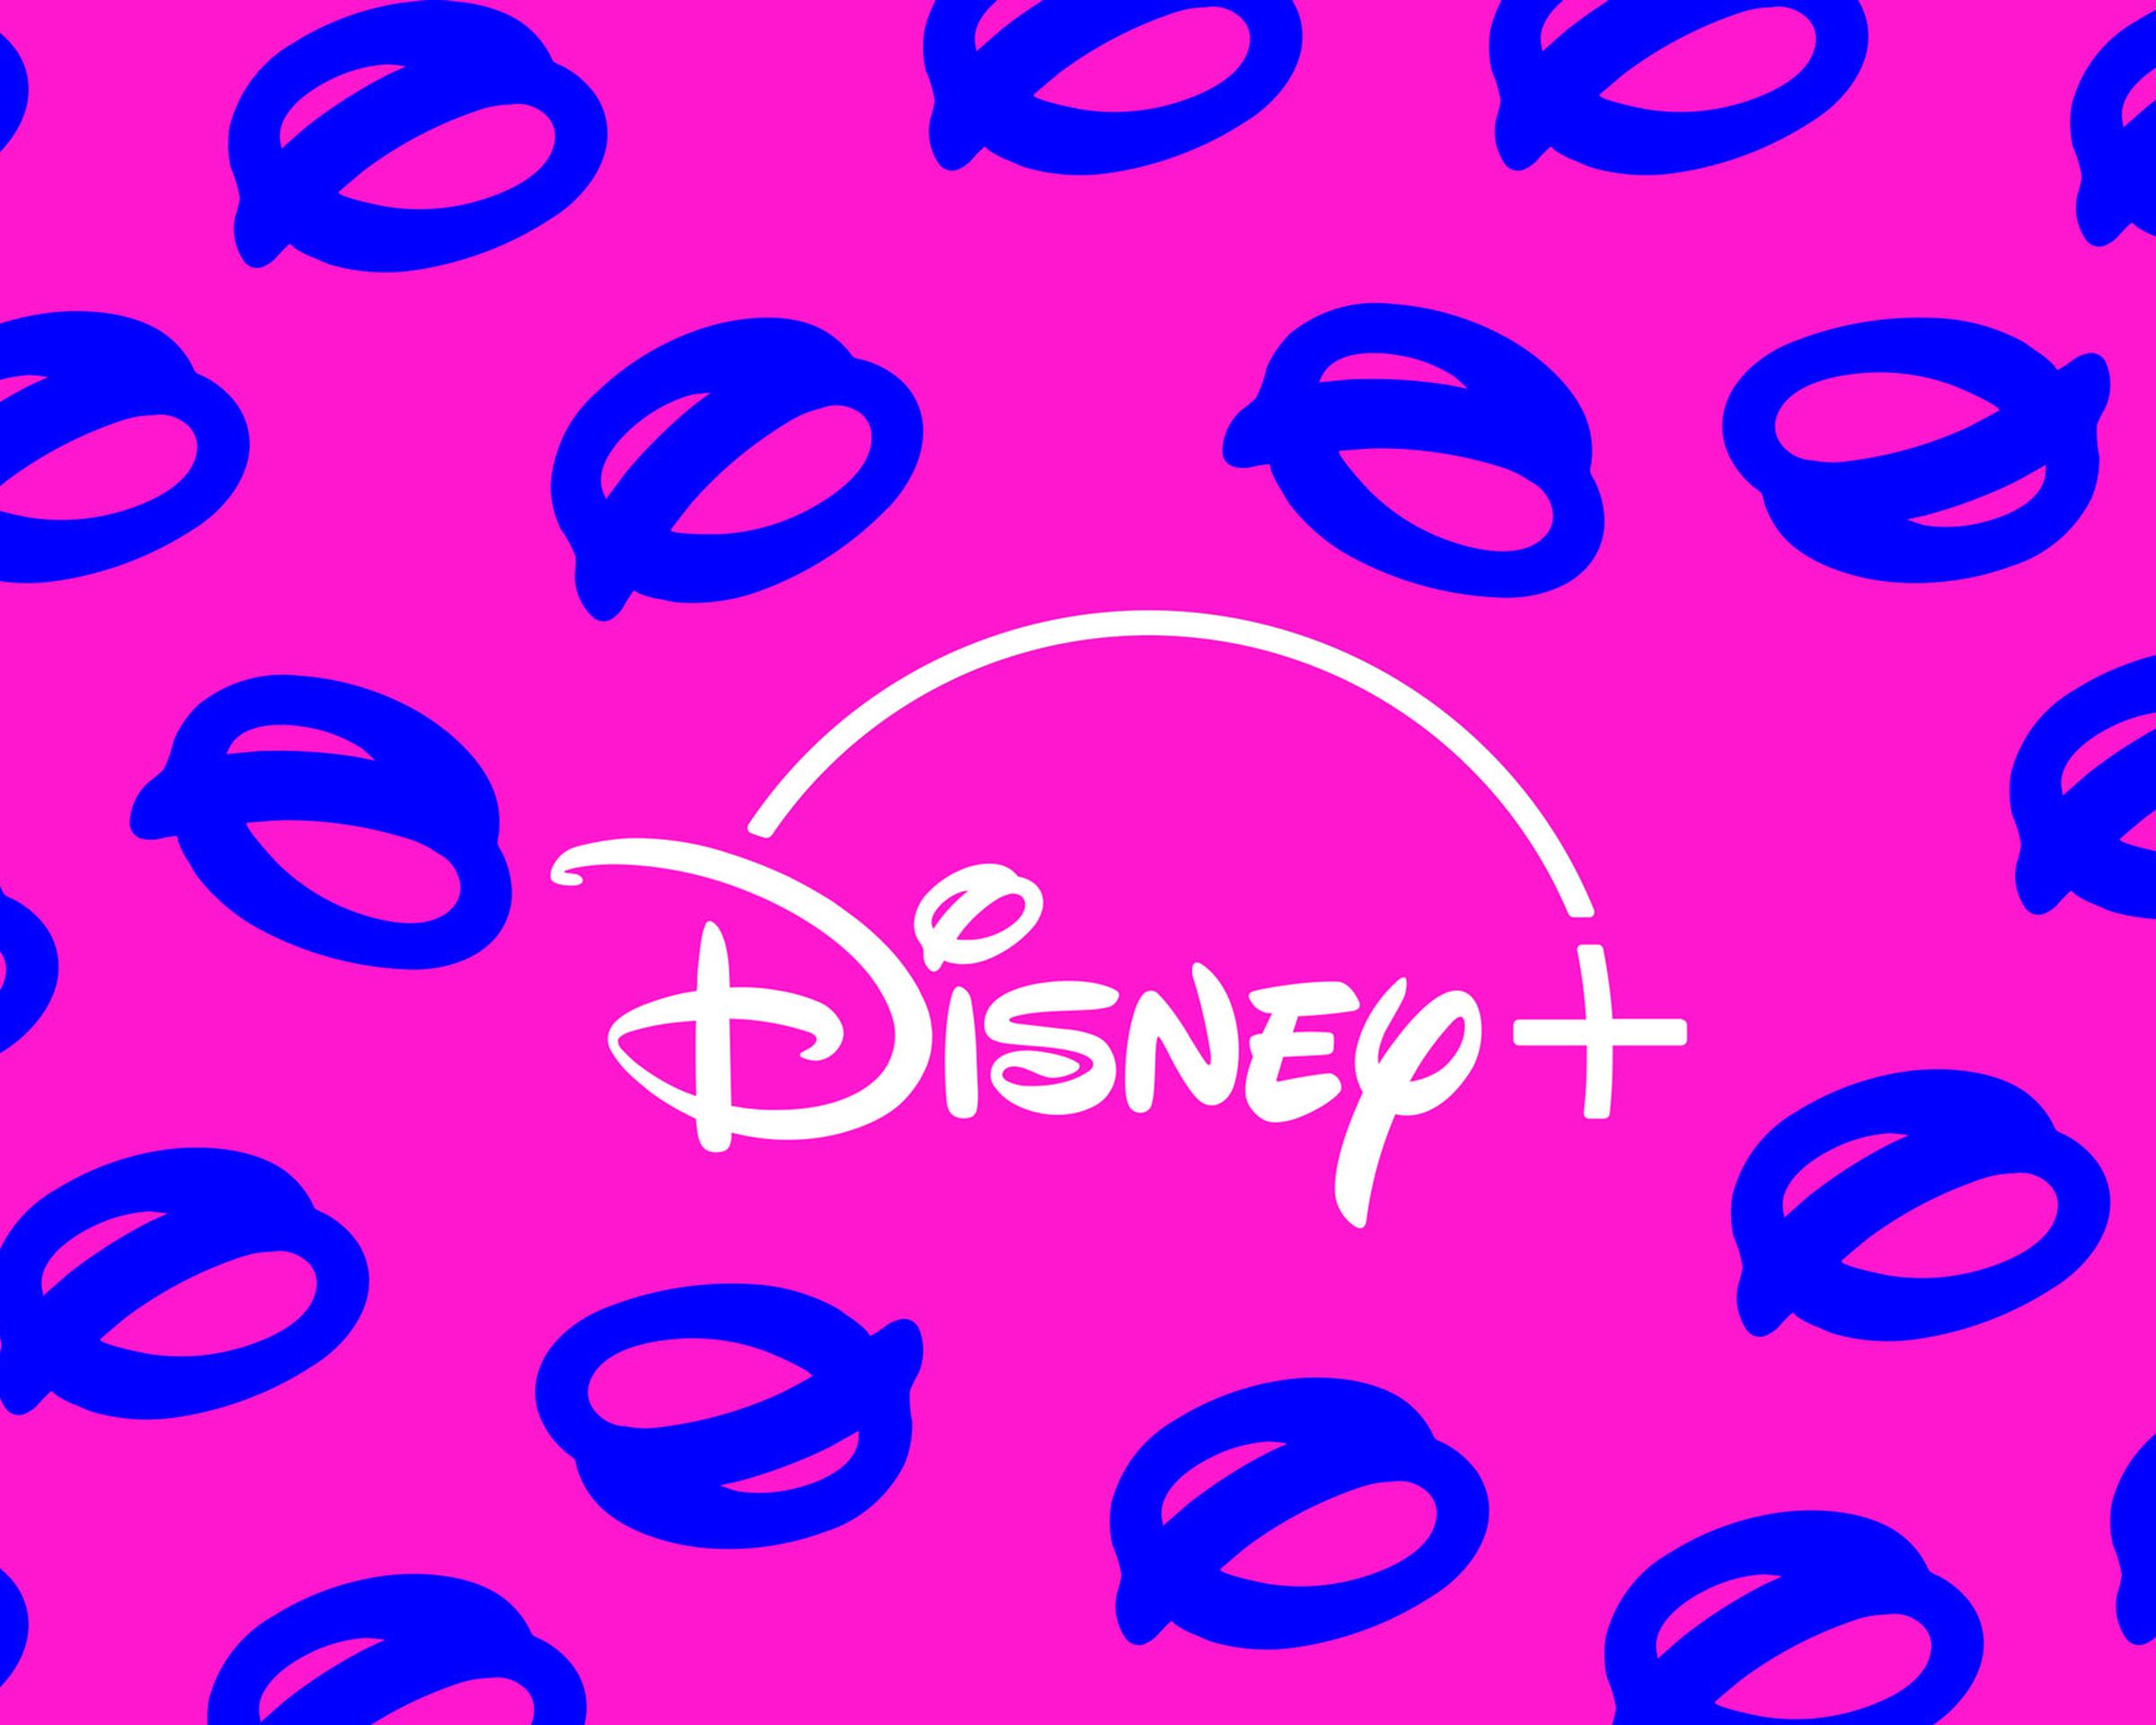 Disney’s logo